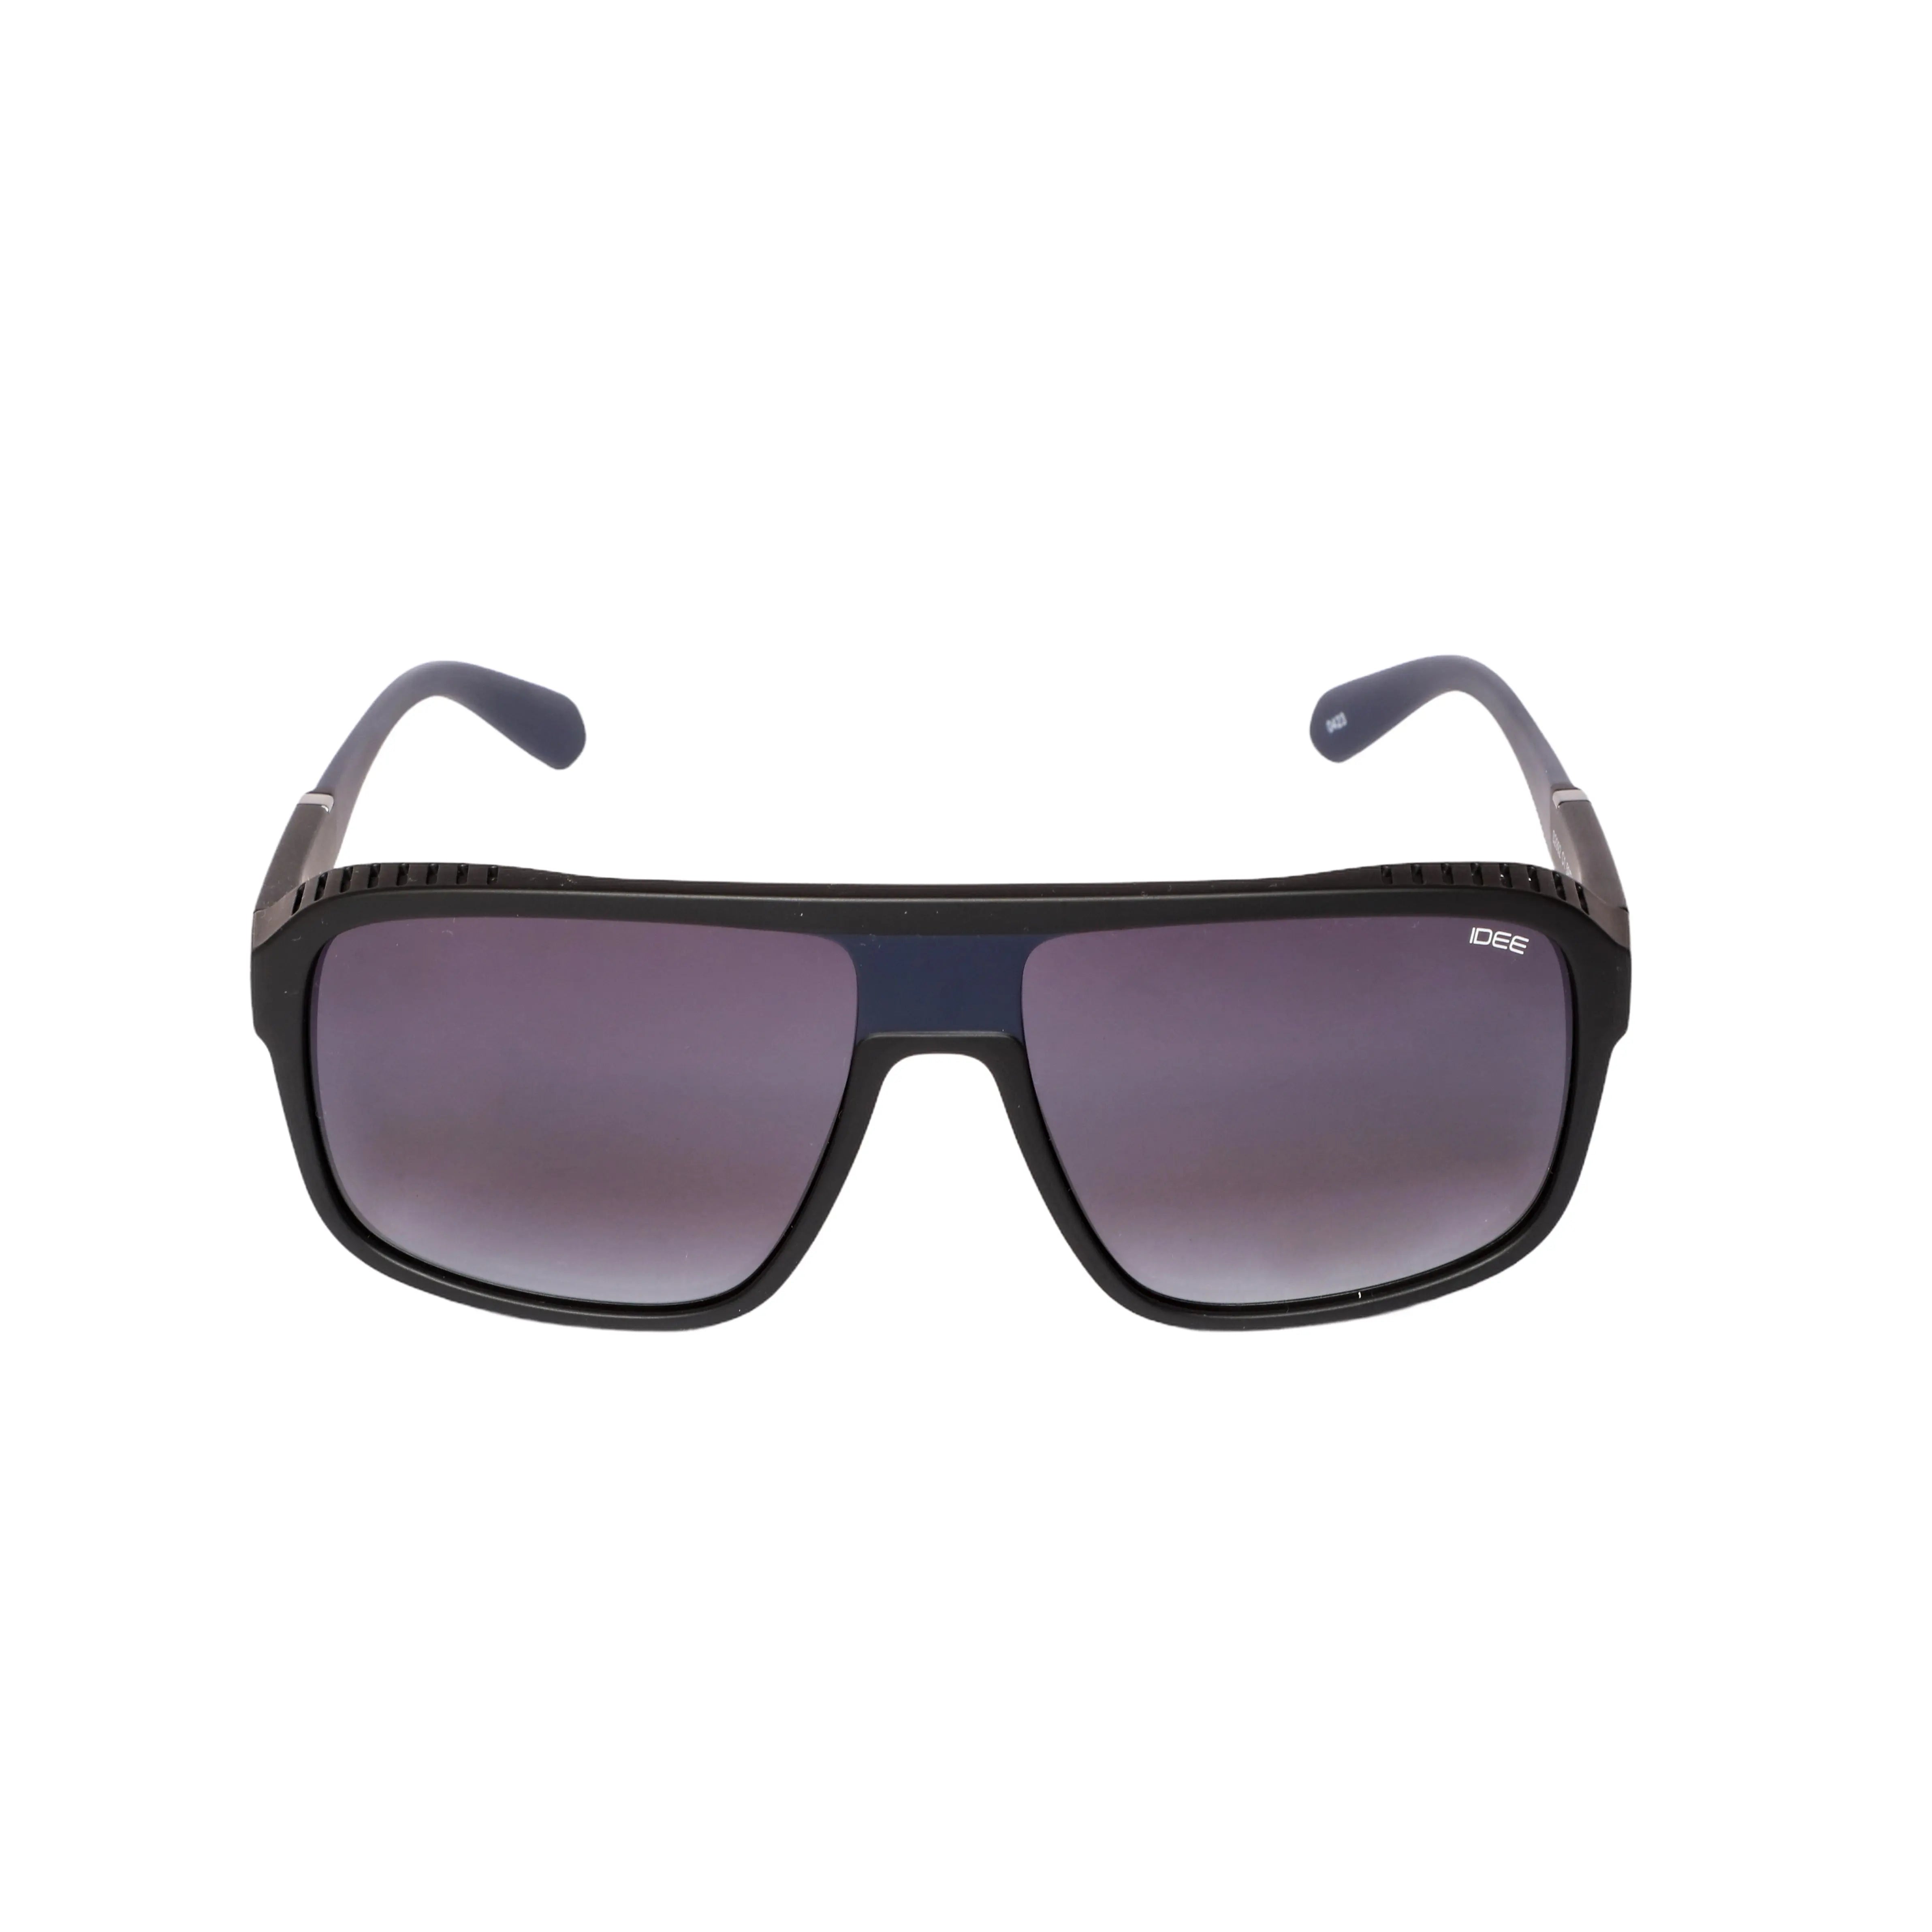 IDEE-S2992--C1 Sunglasses - Premium Sunglasses from IDEE - Just Rs. 3110! Shop now at Laxmi Opticians